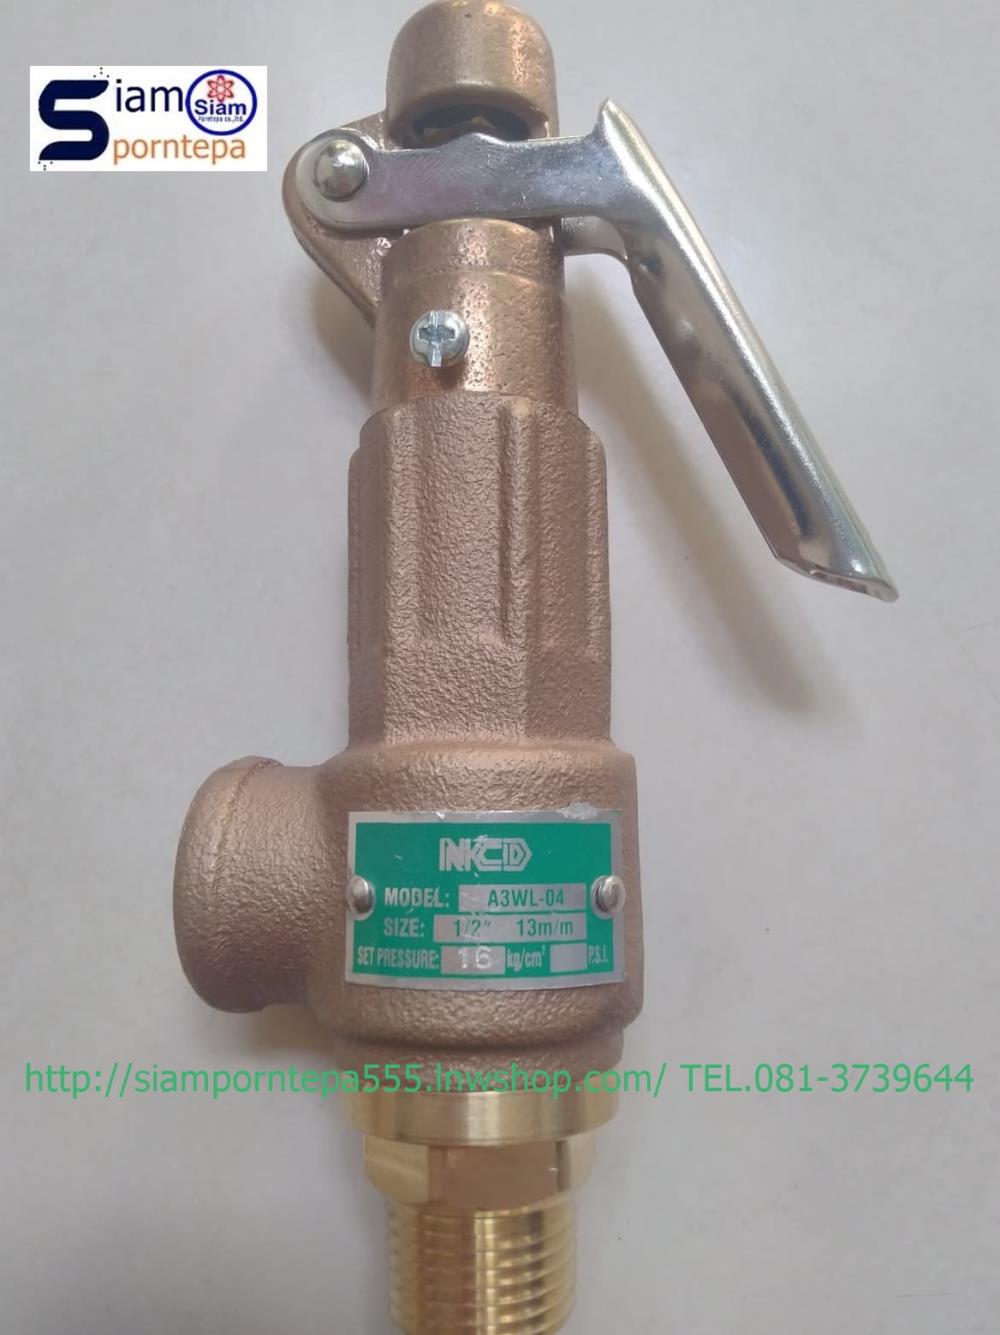 A3WL-20-3.5 Safety relief valve ขนาด 2" ทองเหลือง แบบมีด้าม Pressure 0-3.5 bar ใช้กับ น้ำ ลม ส่งฟรีทั่วประเทศ,NCD A3WL-20-3.5 Safety relief valve ขนาด 2",A3WL-20-3.5 Safety relief valve ขนาด 2",NCD A3WL-20-3.5 Safety relief valve ขนาด 2" เกาหลี,NCD A3WL-20-3.5 Safety relief valve ขนาด 2",Pumps, Valves and Accessories/Valves/Safety Valve